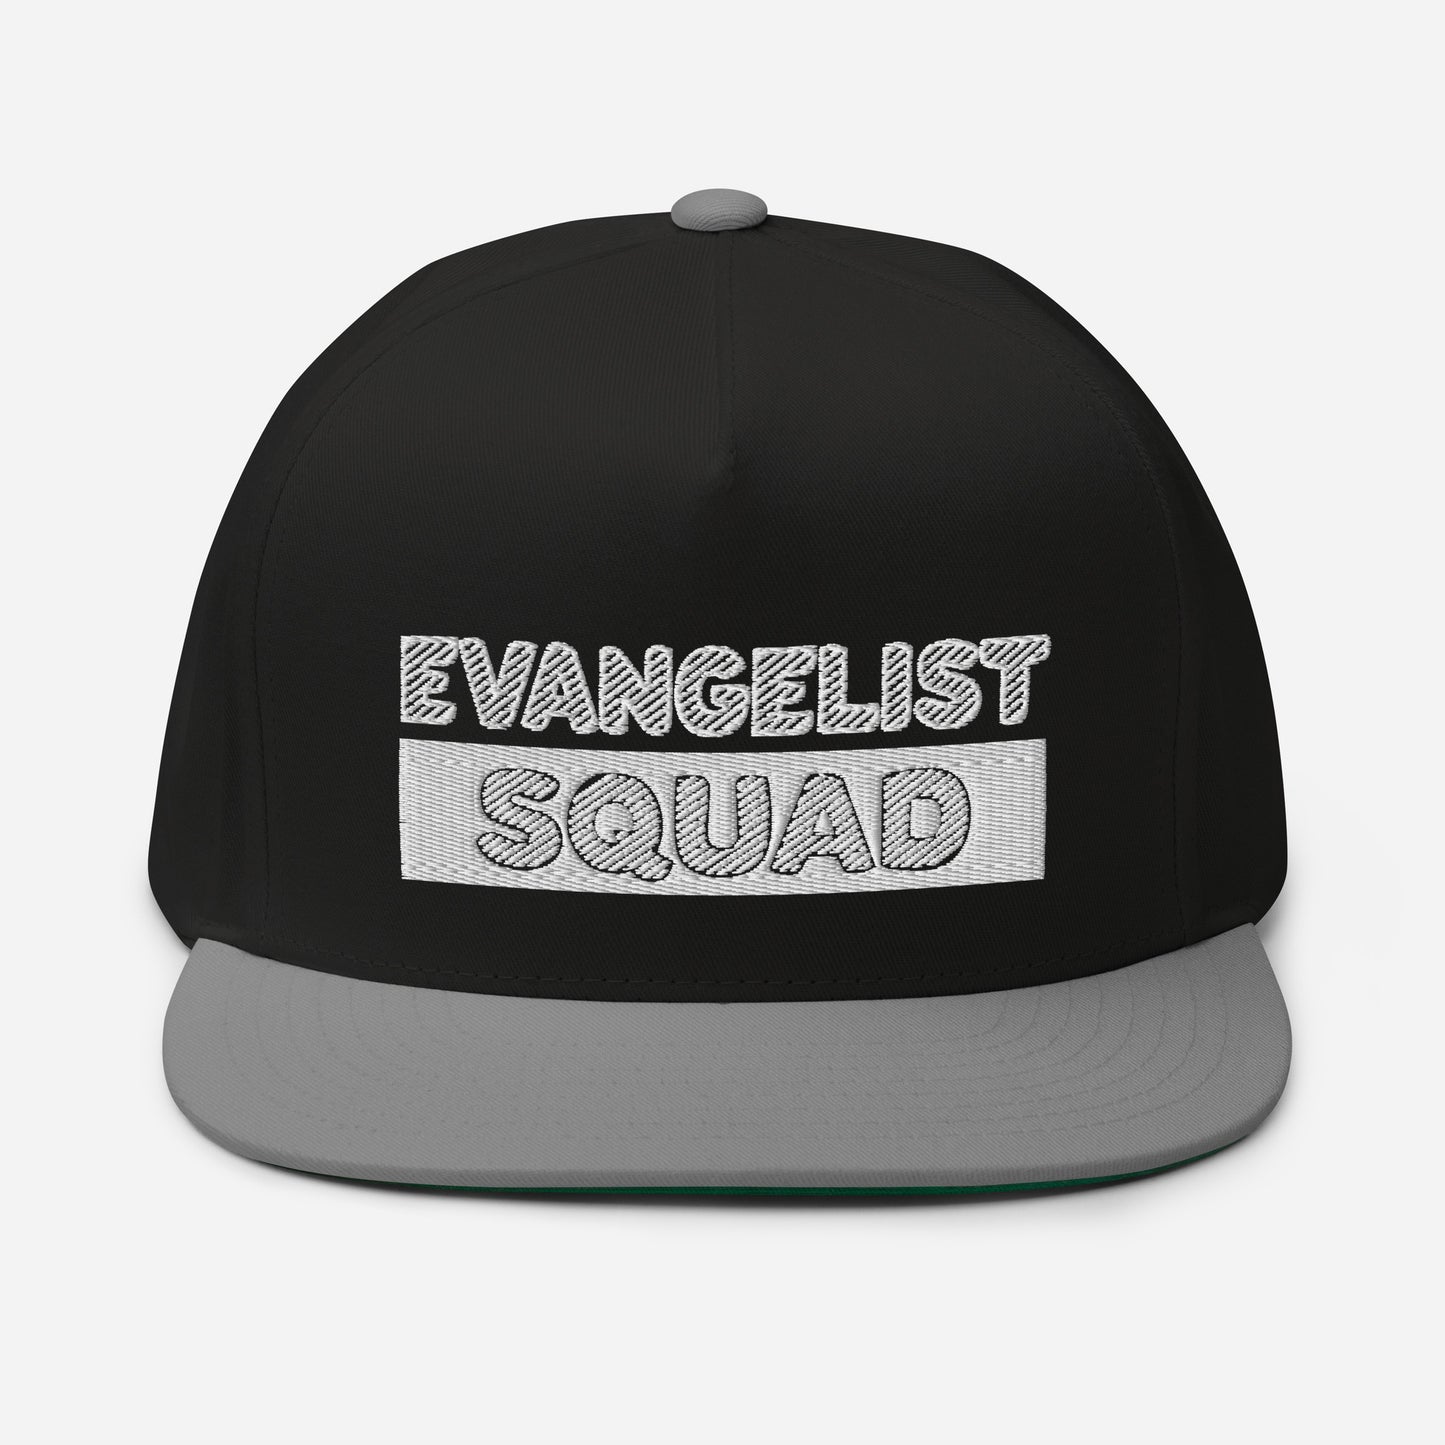 Evangelist Squad Flat Bill Cap